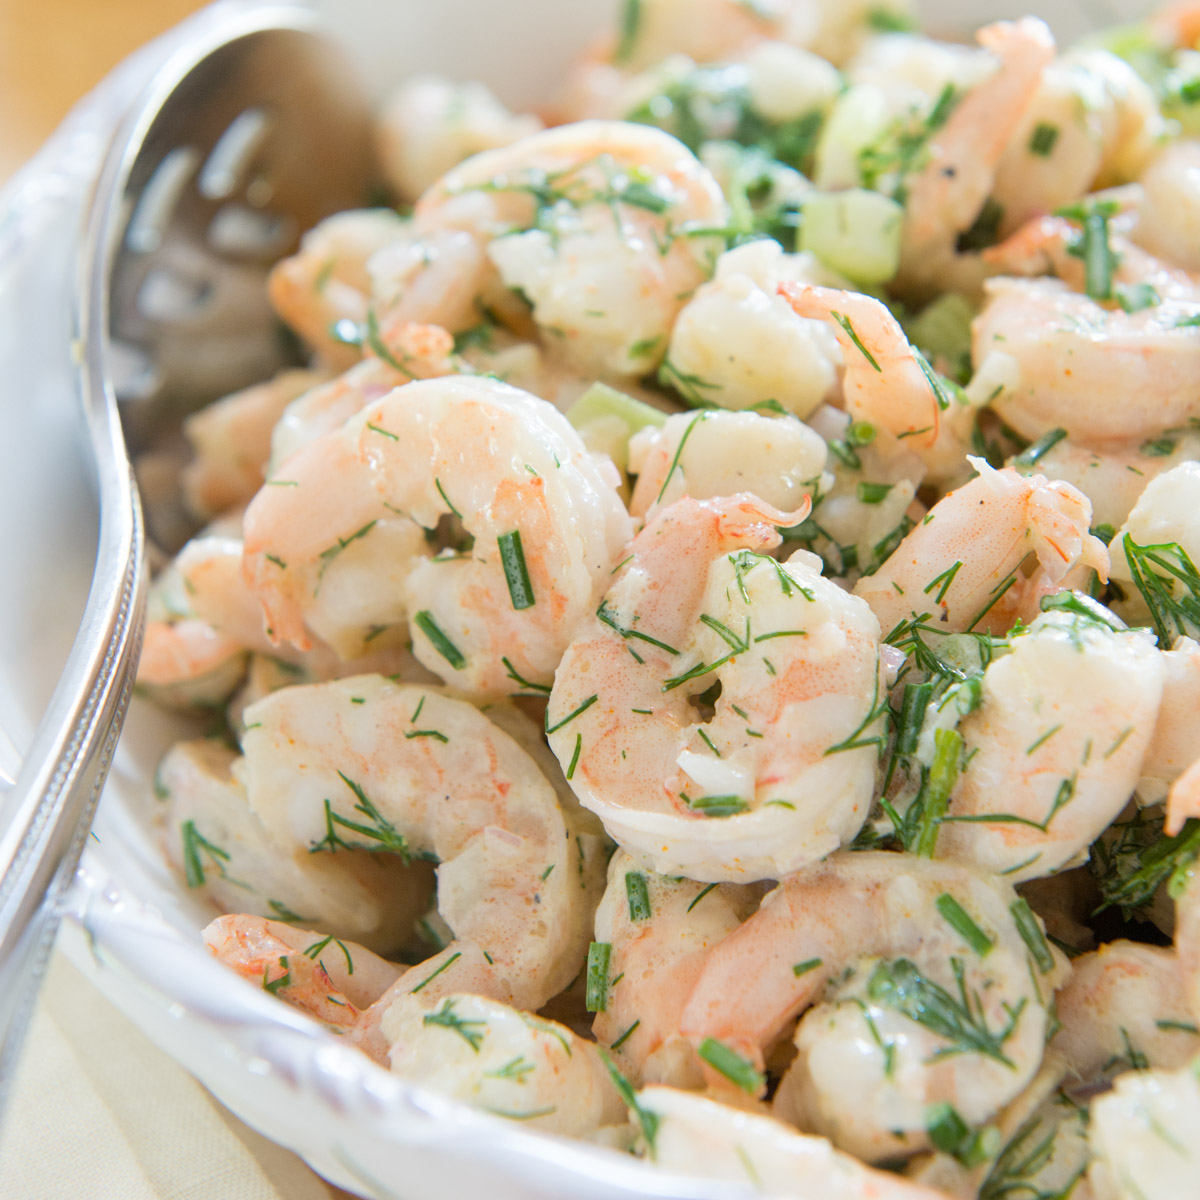 https://www.fifteenspatulas.com/wp-content/uploads/2020/05/Shrimp-Salad-8.jpg